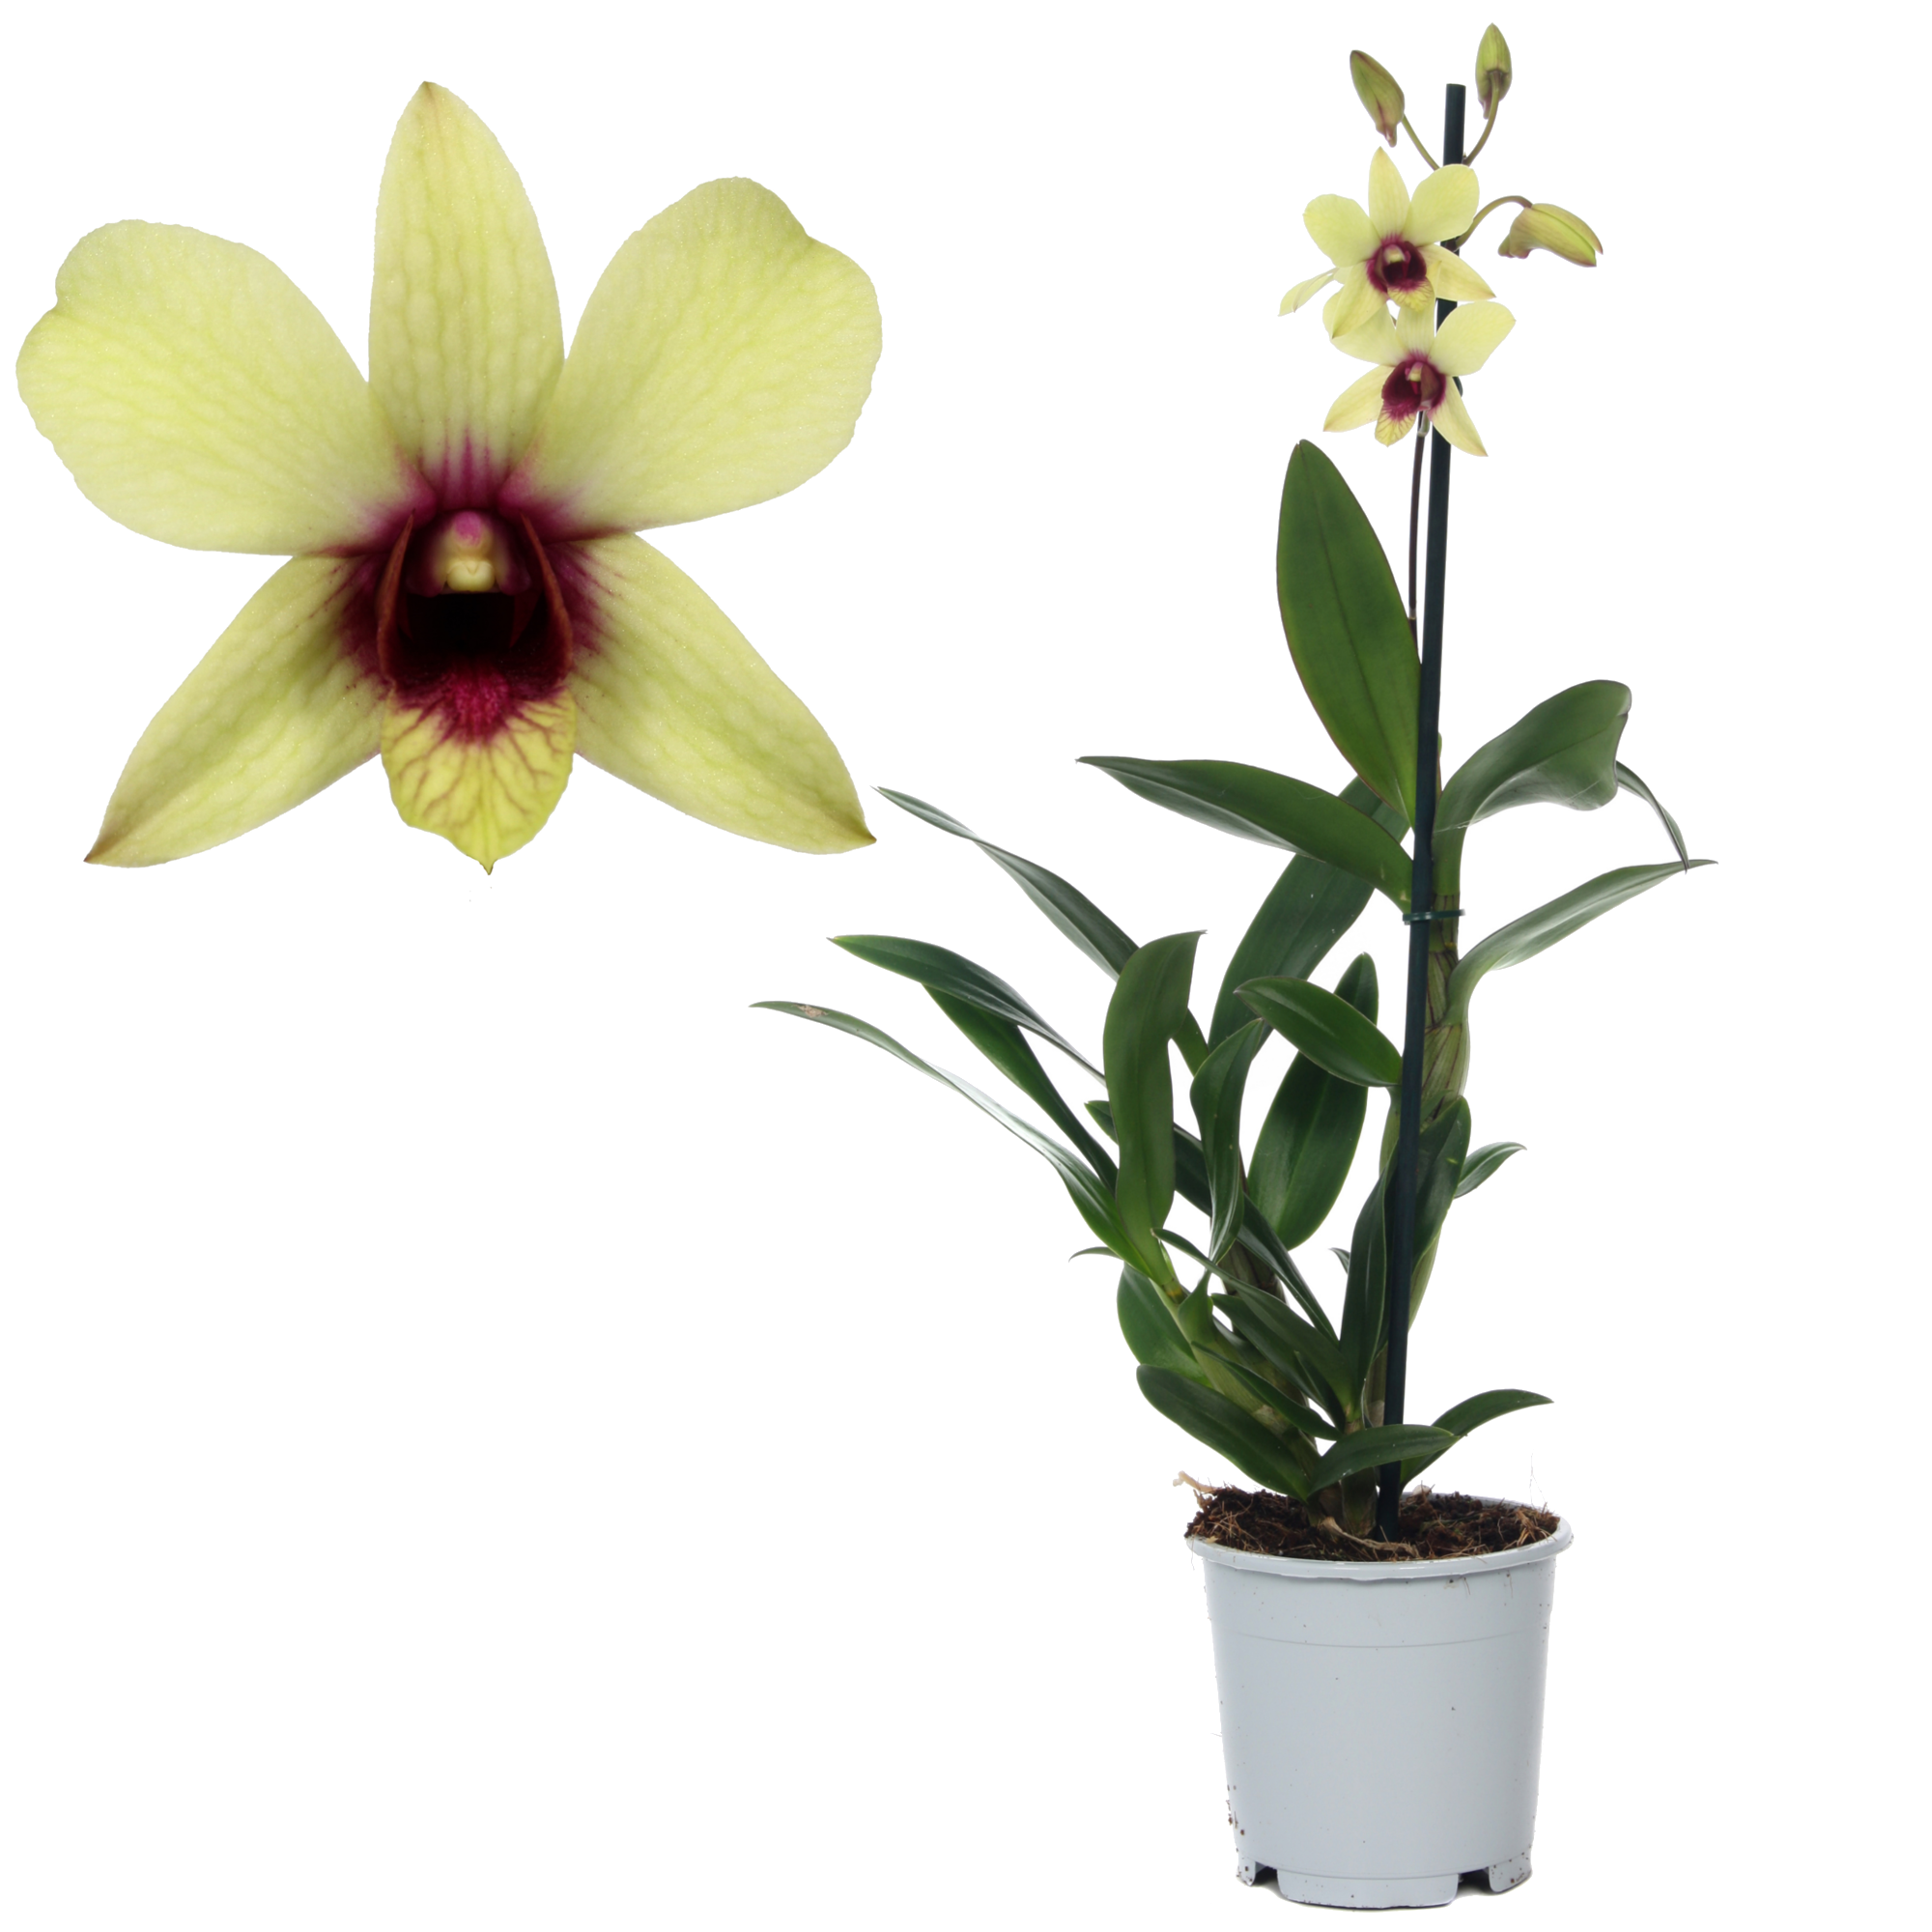 Dendrobium-Orchidee 'Ban Chocolat' 1 Rispe grün/violett 11 cm Topf + product picture